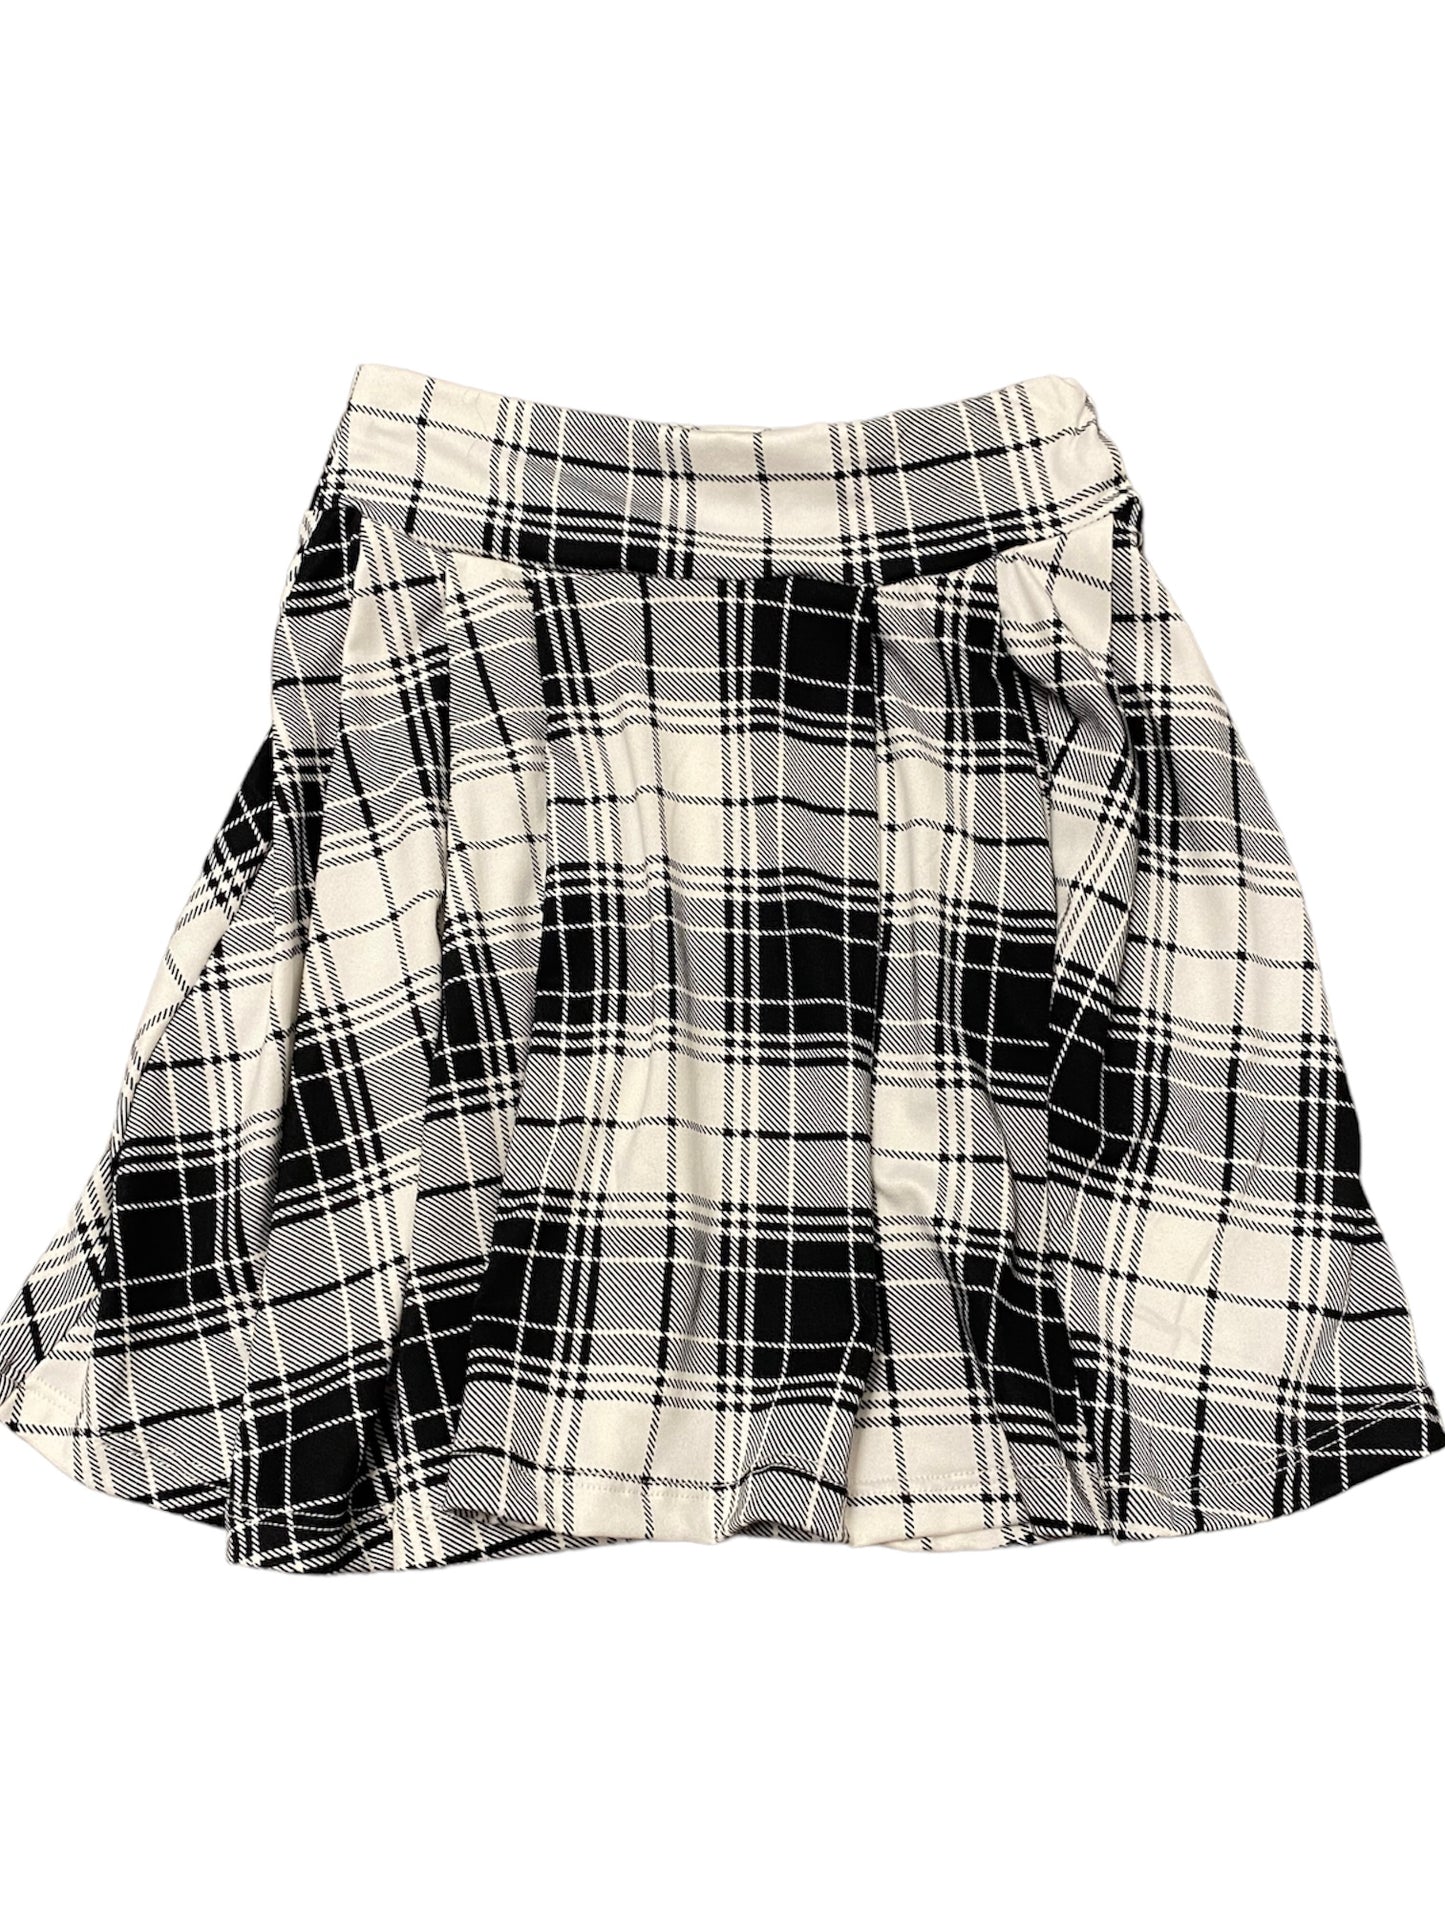 Ivory/Black Plaid Skirt